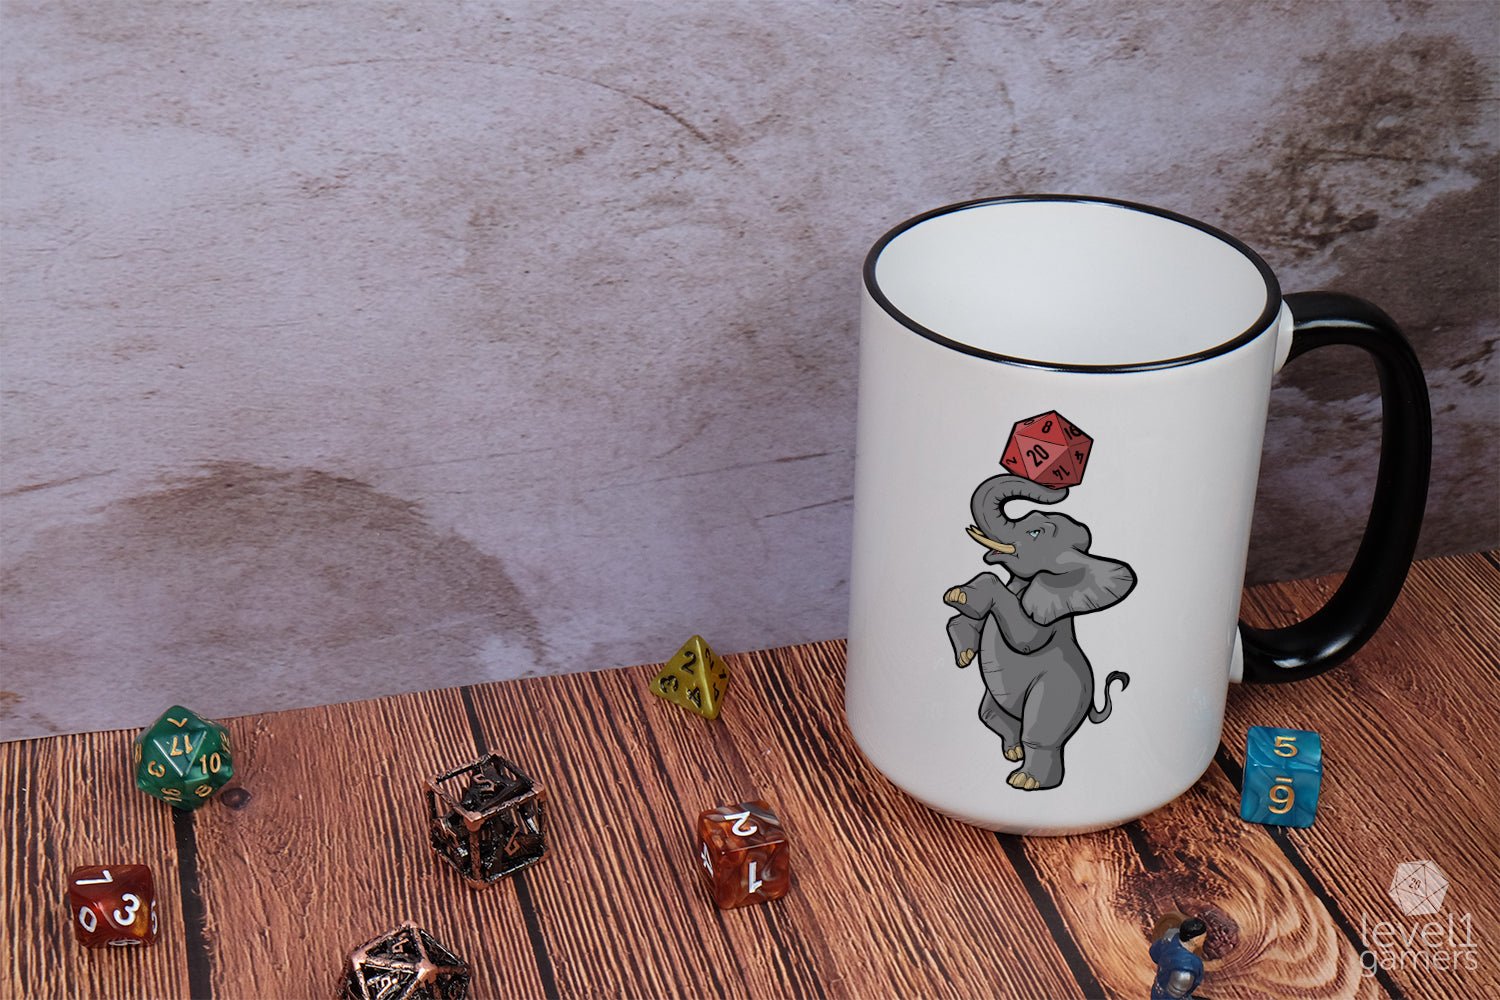 DnD Elephant Mug Mugs Level 1 Gamers   